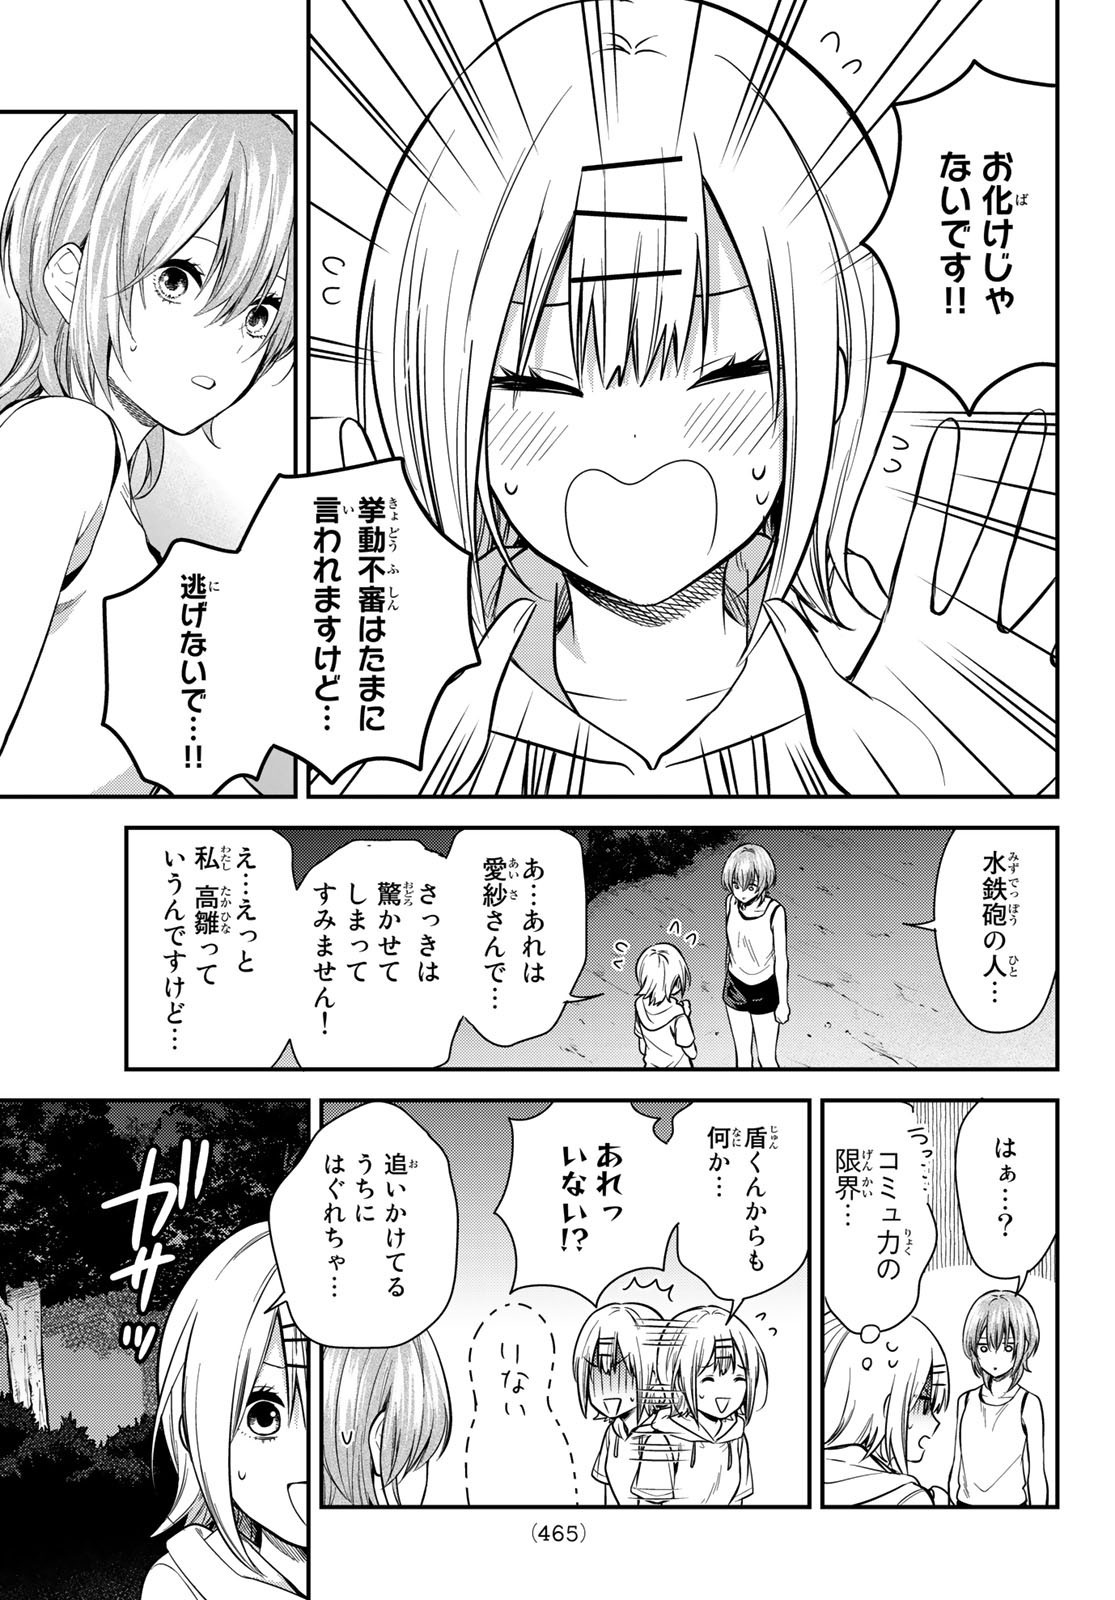 Kimi ga Megami Nara Ii no ni (I Wish You Were My Muse) - Chapter 022 - Page 3